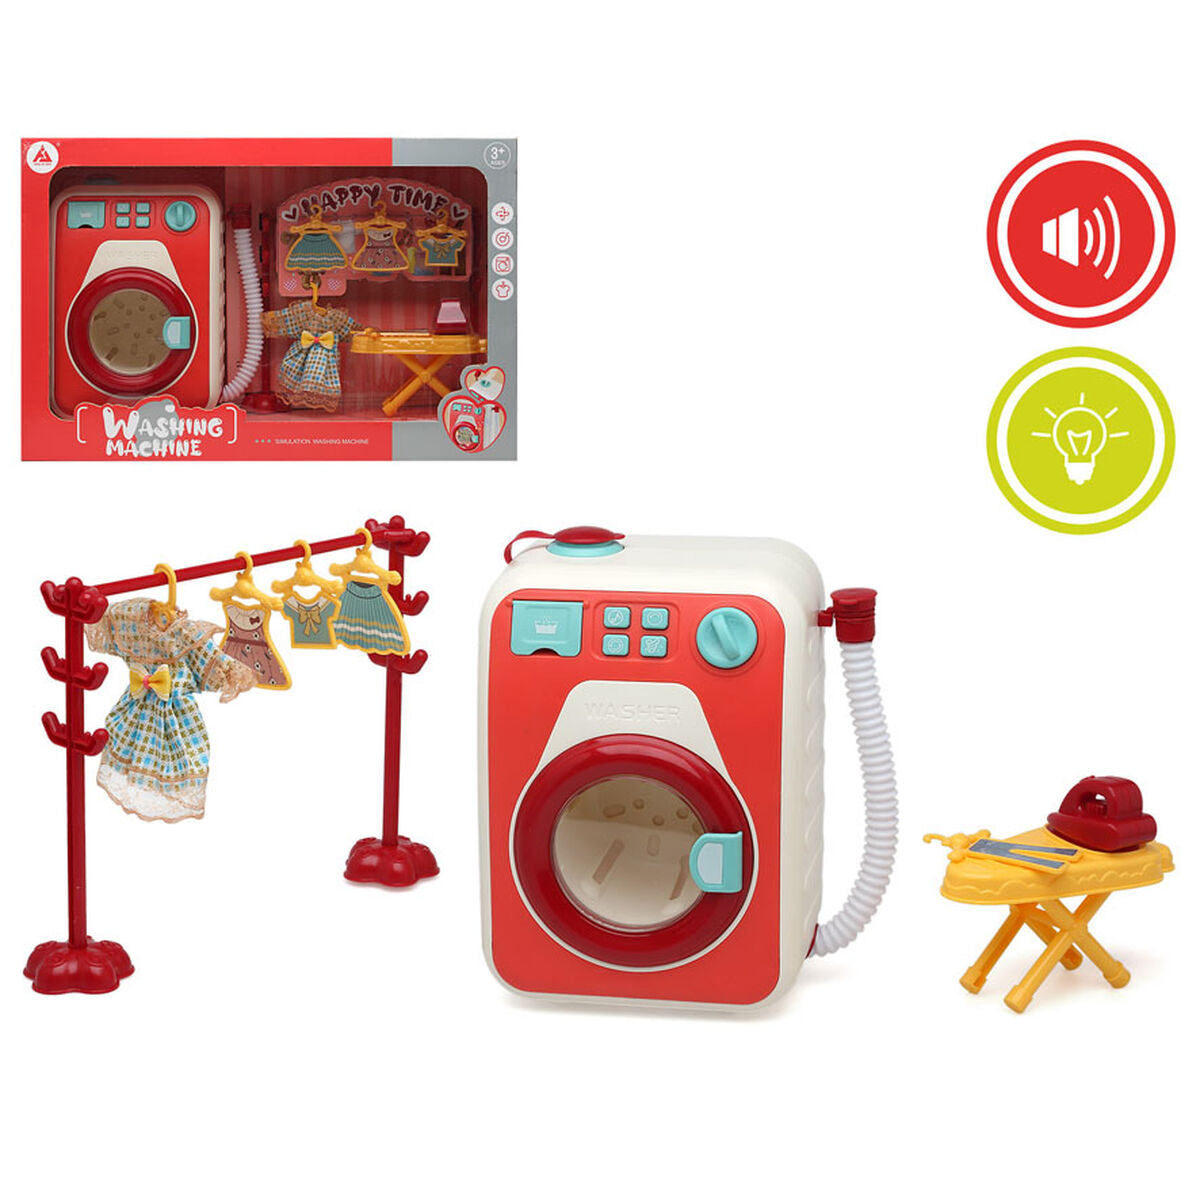 Toy washing machine Electric Toy 43 x 28 cm